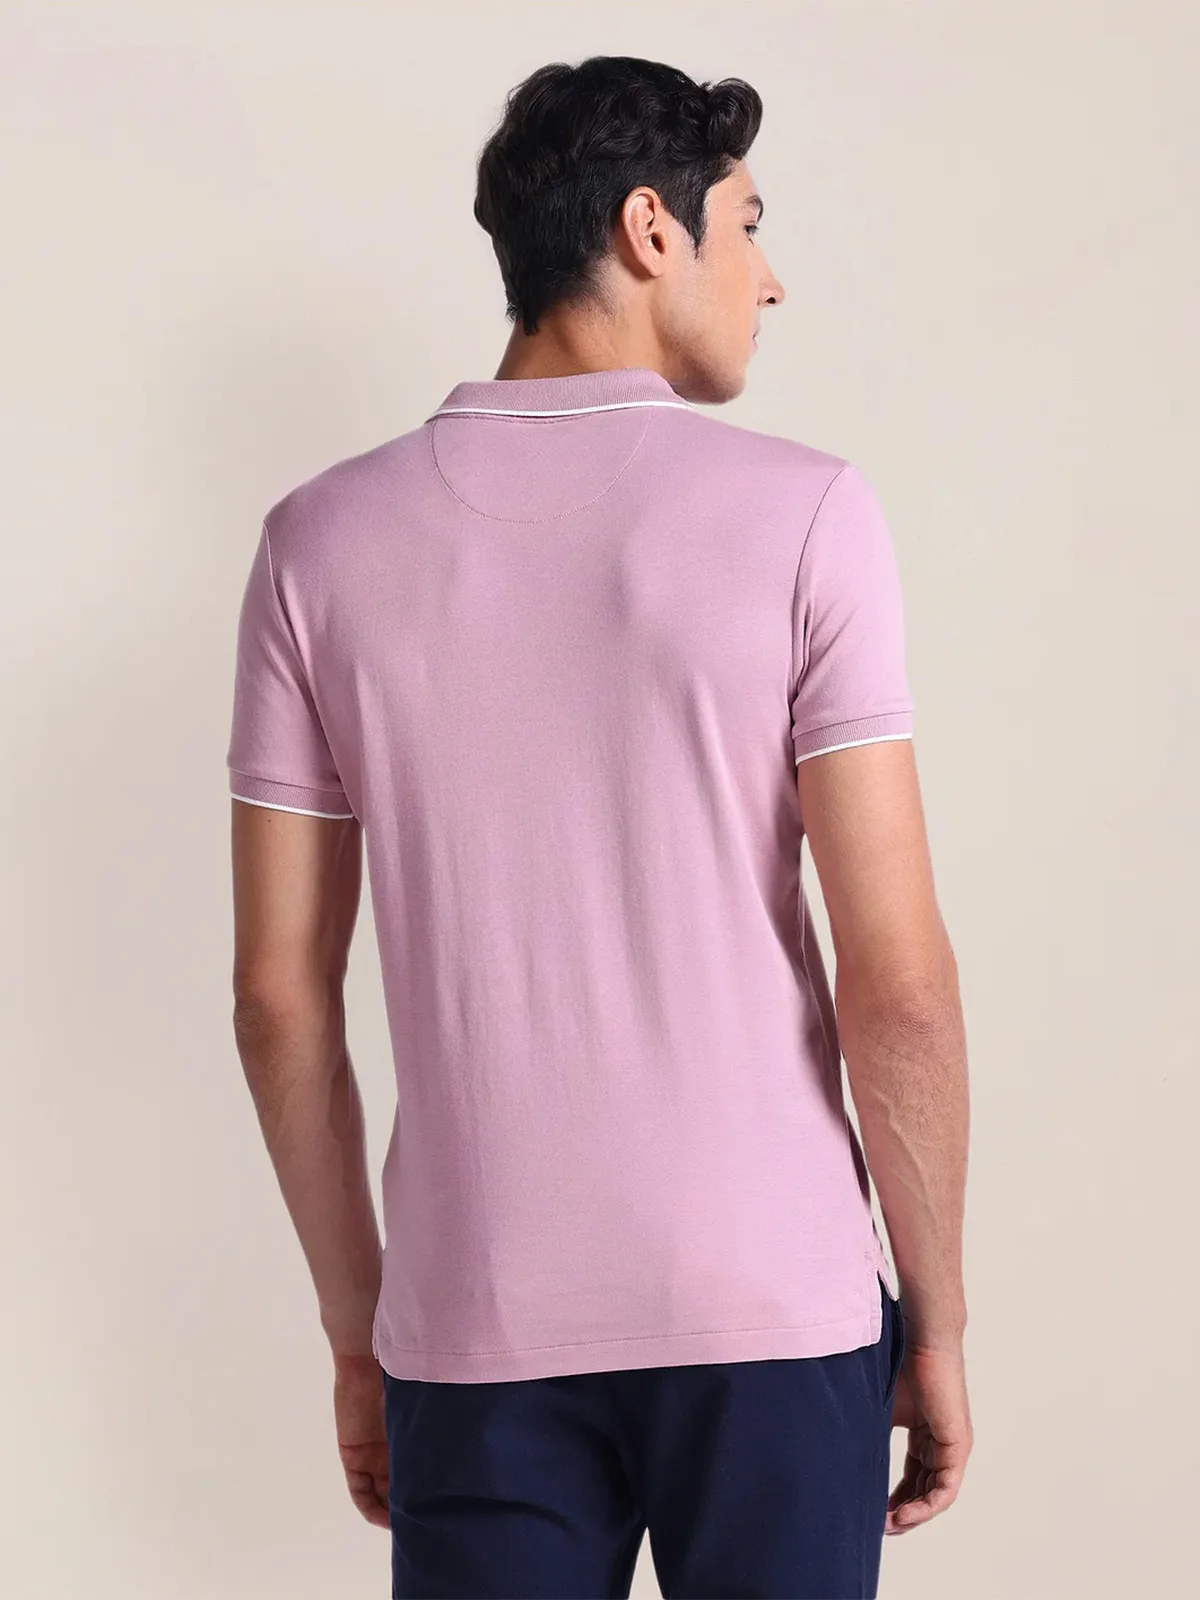 U S POLO ASSN mauve pink cotton t-shirt